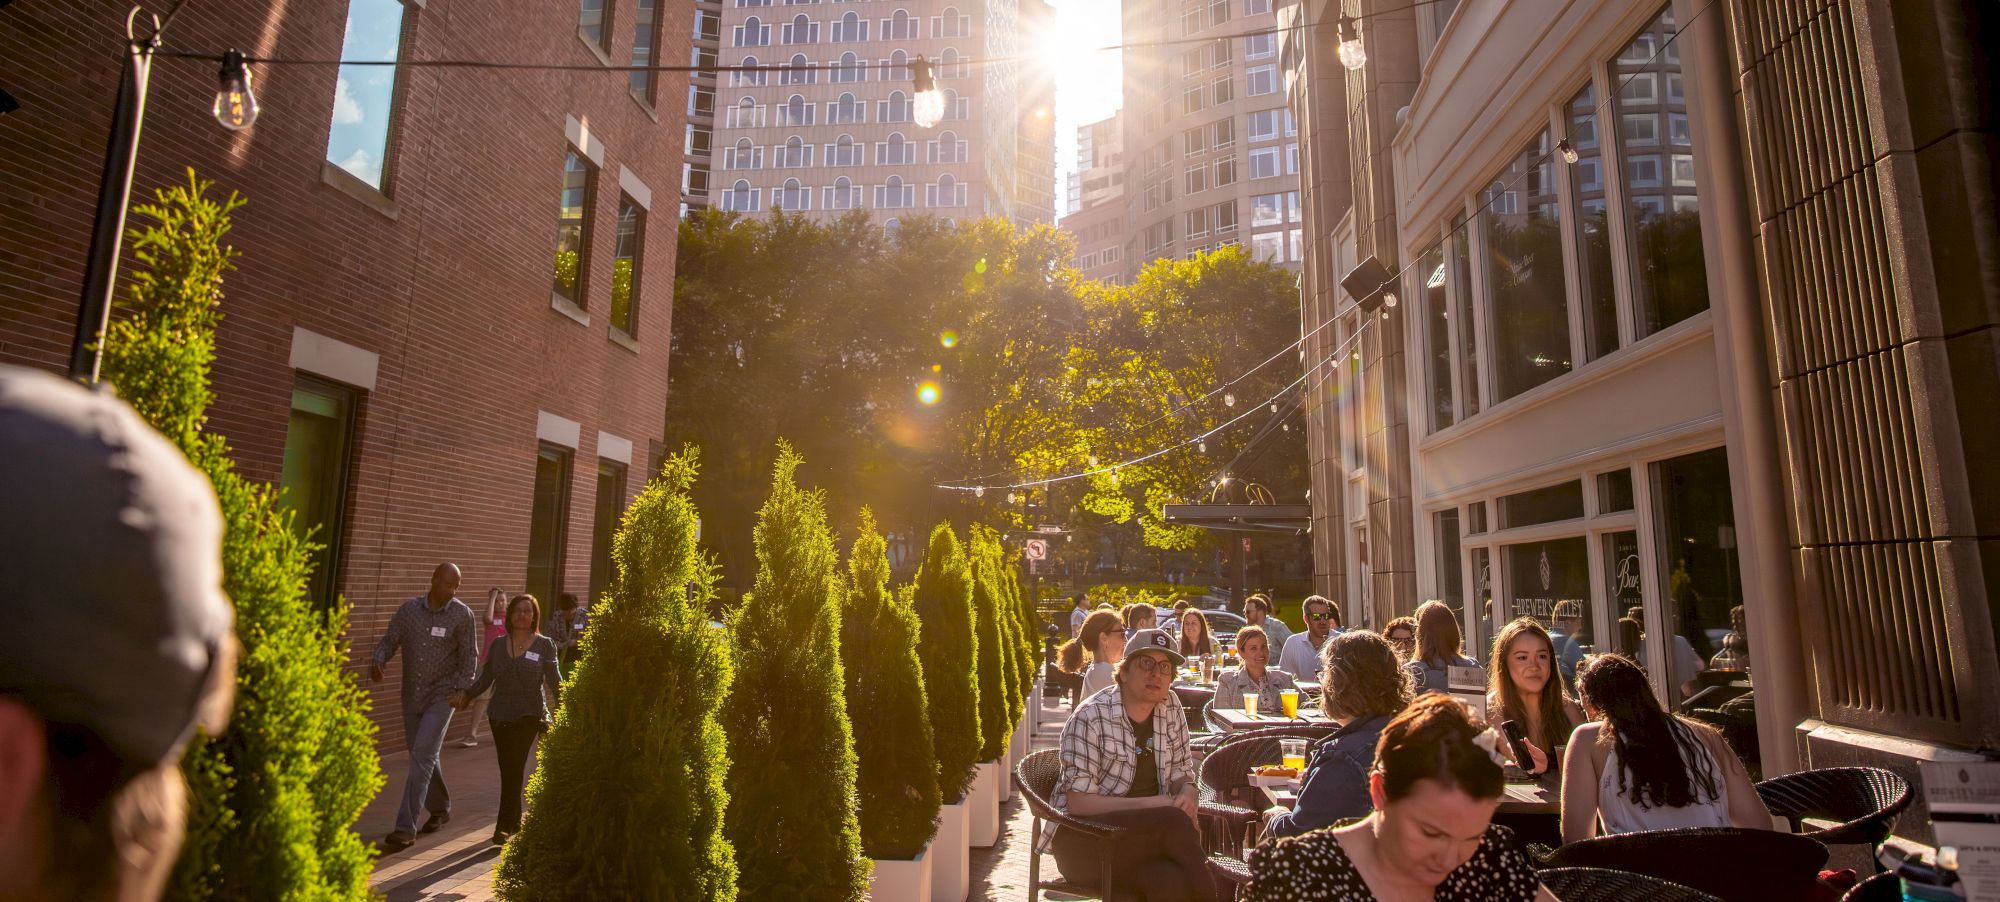 People dining outdoors, sun shining through buildings, urban setting.